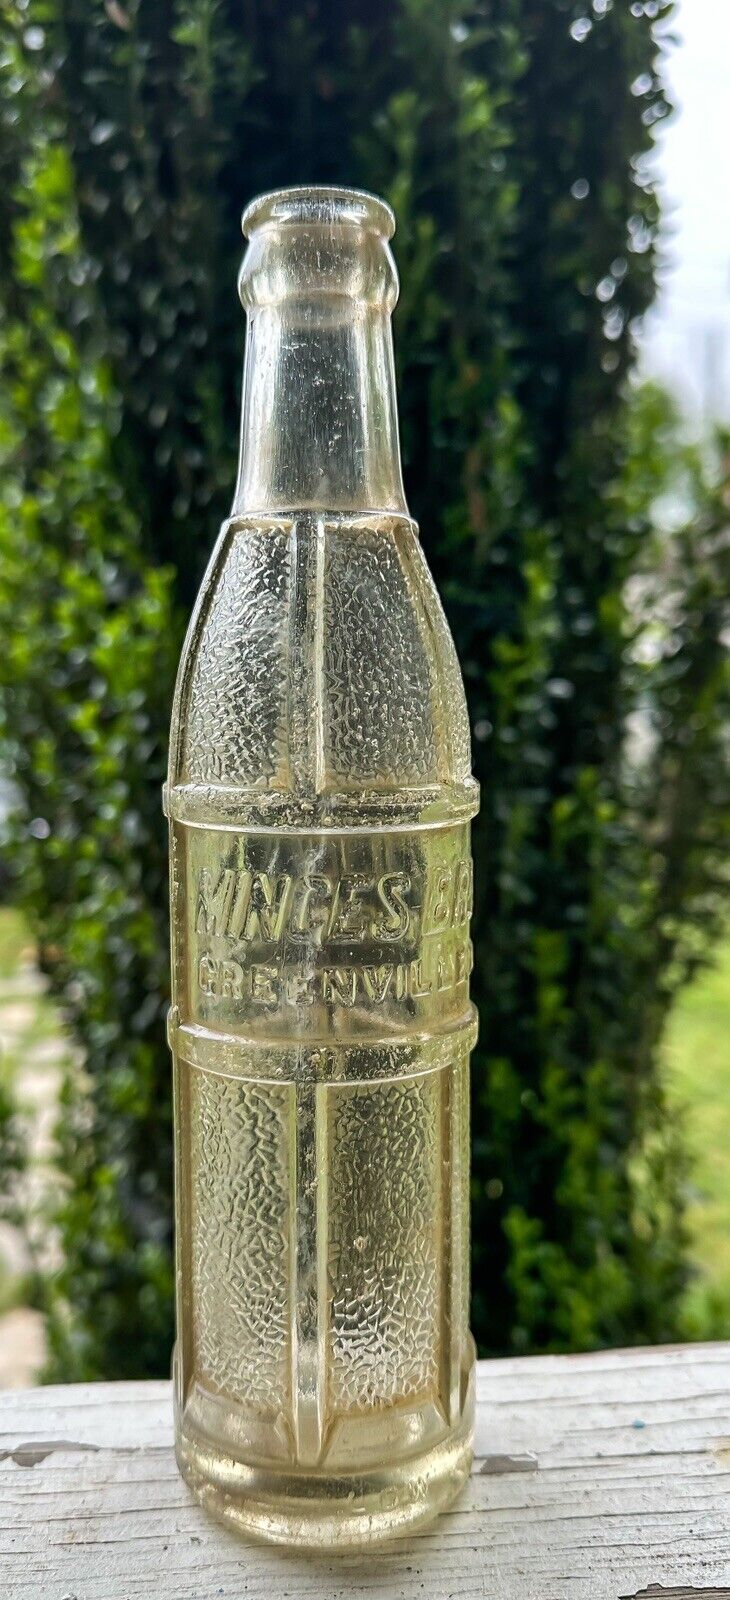 Vintage Minges Bros ( Pepsi Art Deco Soda Bottle) From Greenville NC.